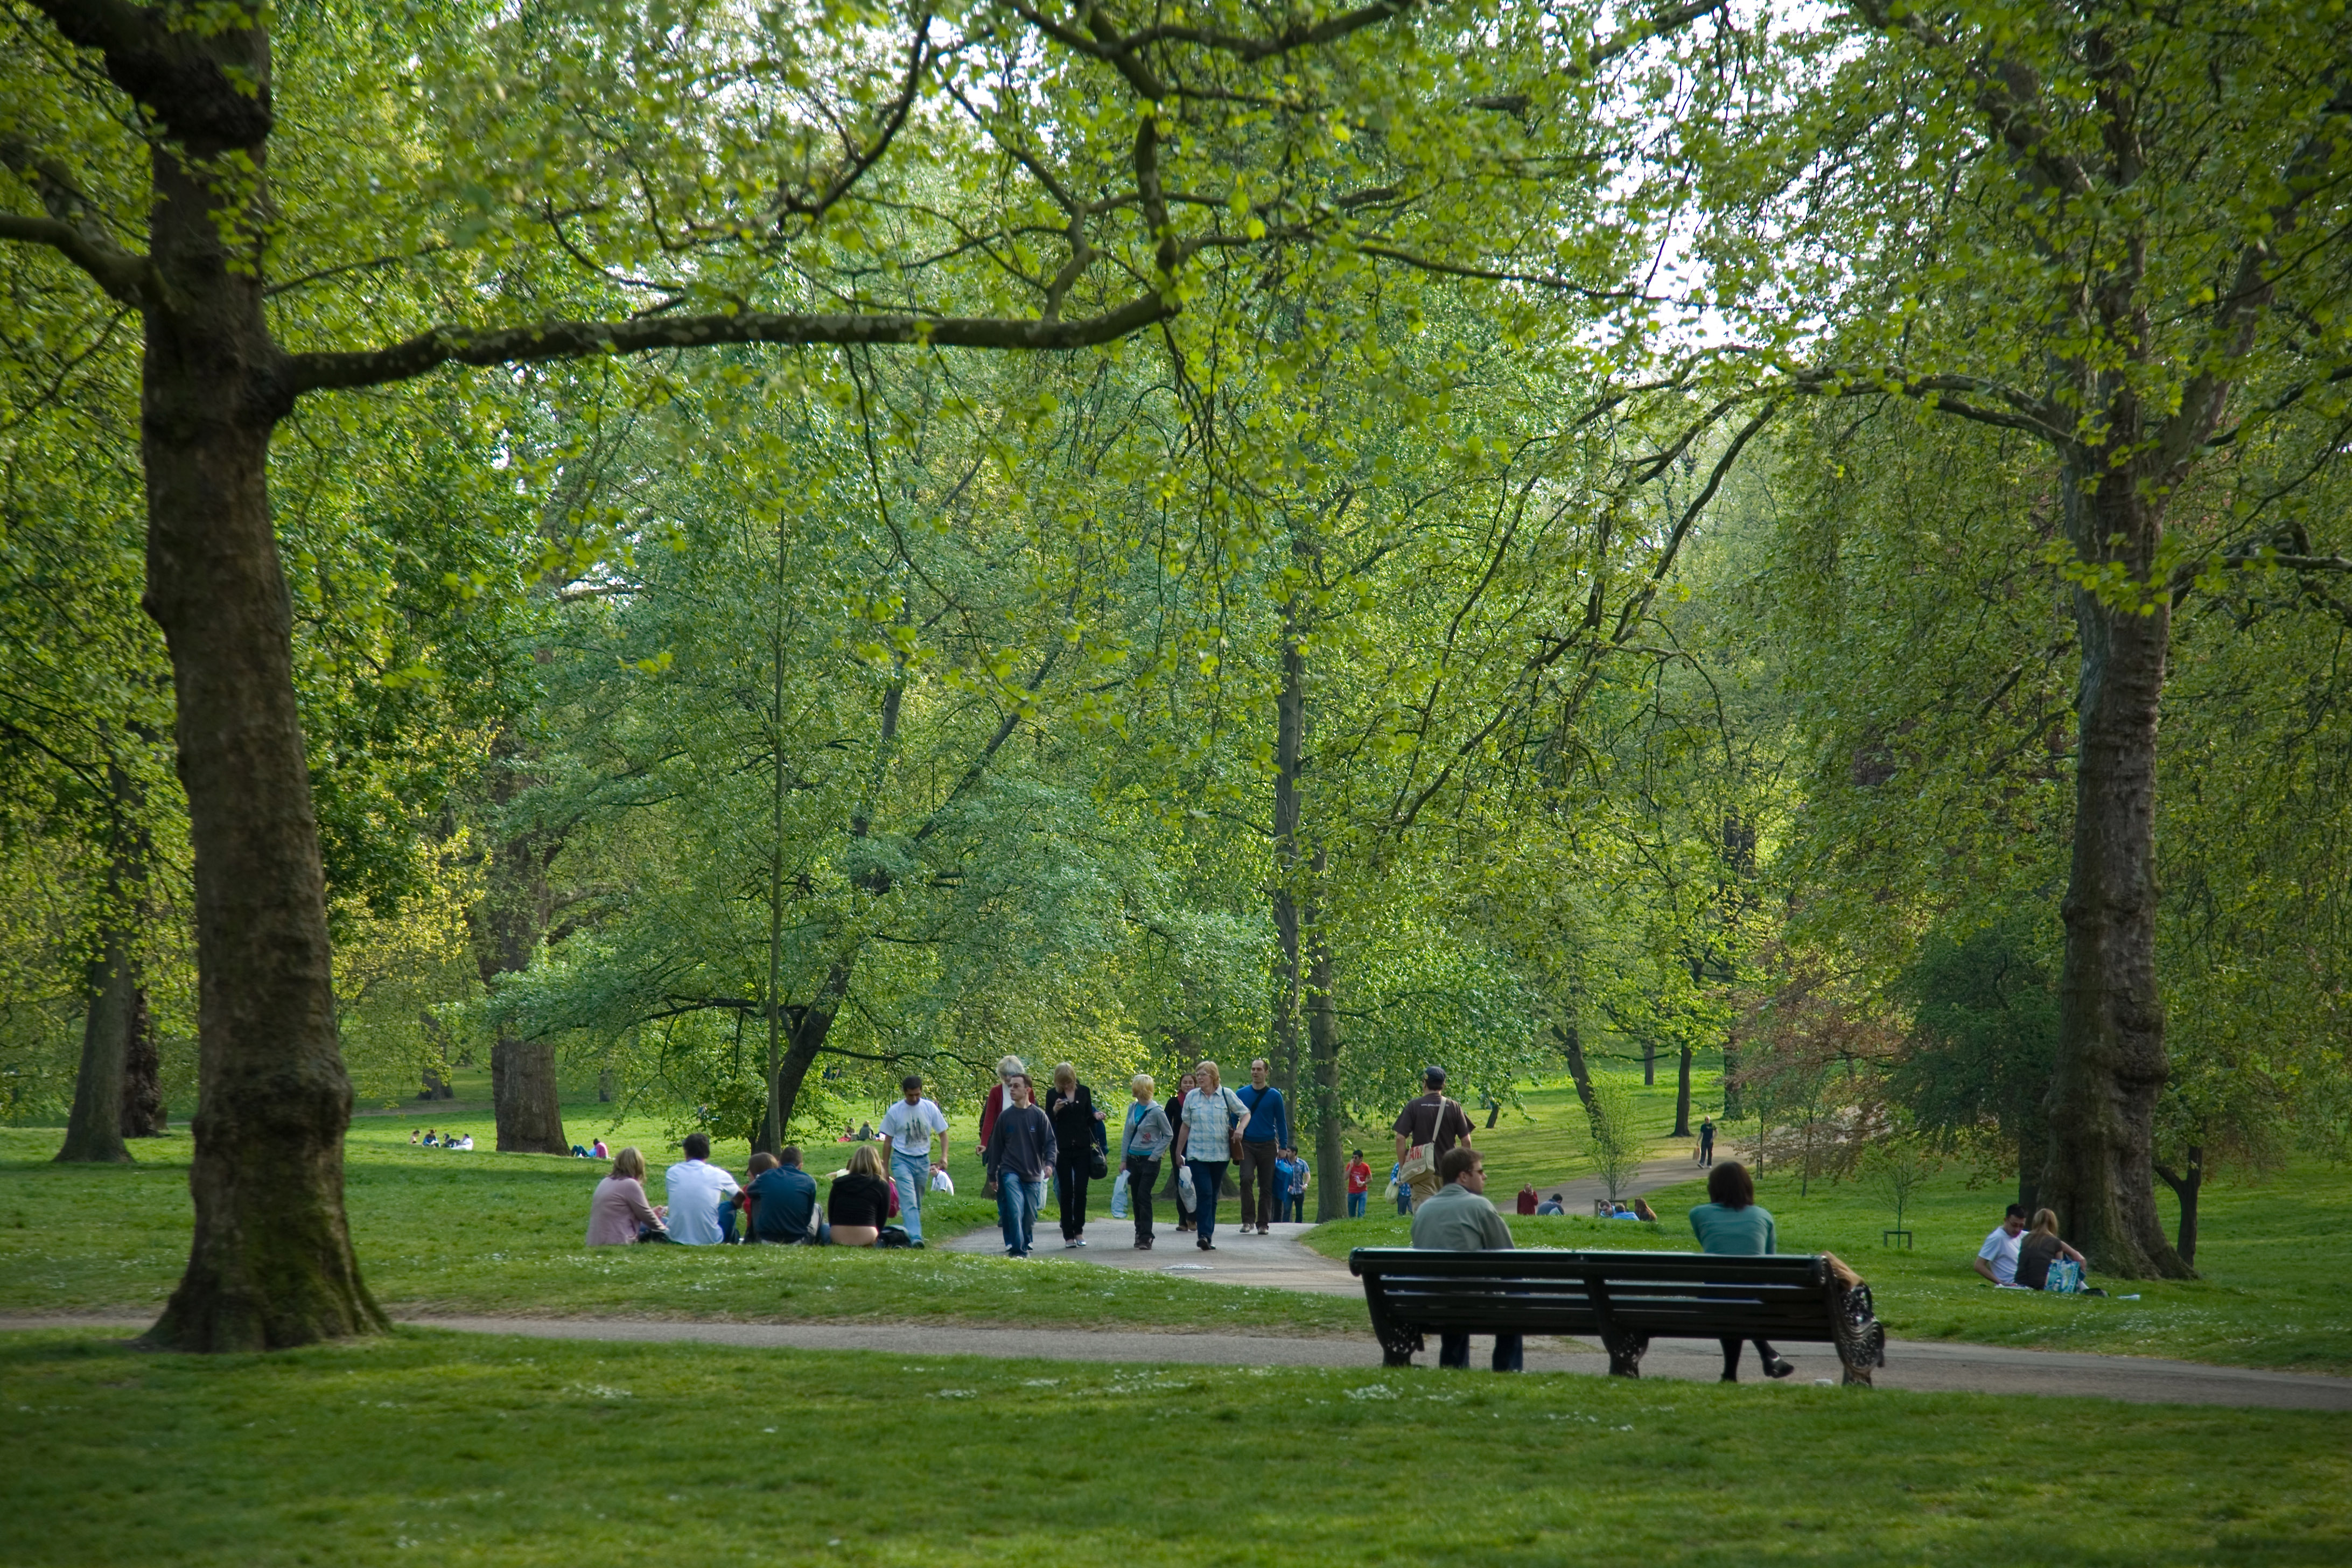 File:Green Park, London - April 2007.jpg - Wikimedia Commons